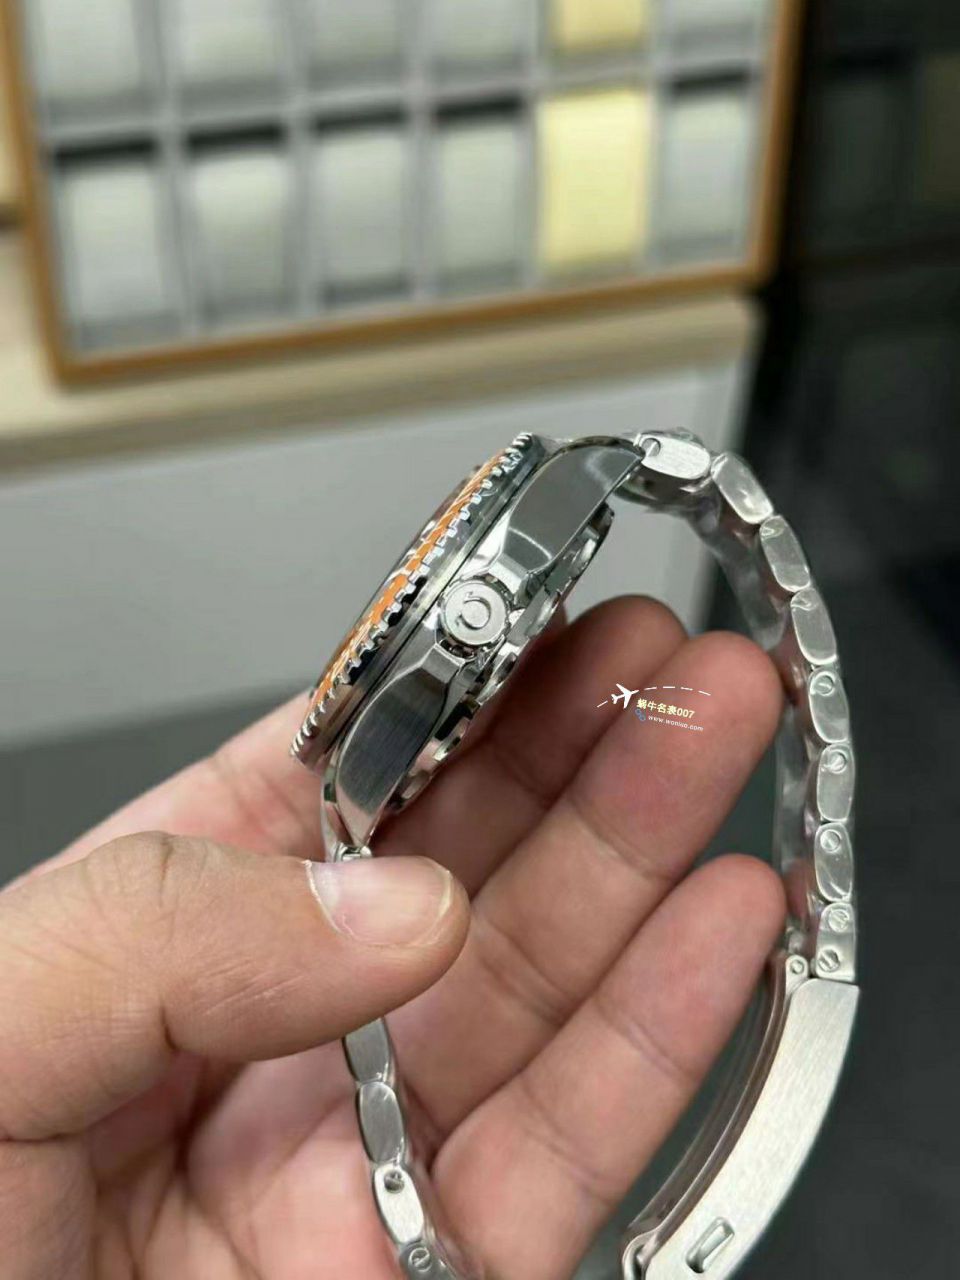 VS厂欧米茄海马6000米海王215.30.46.21.06.001一比一复刻手表 / M782